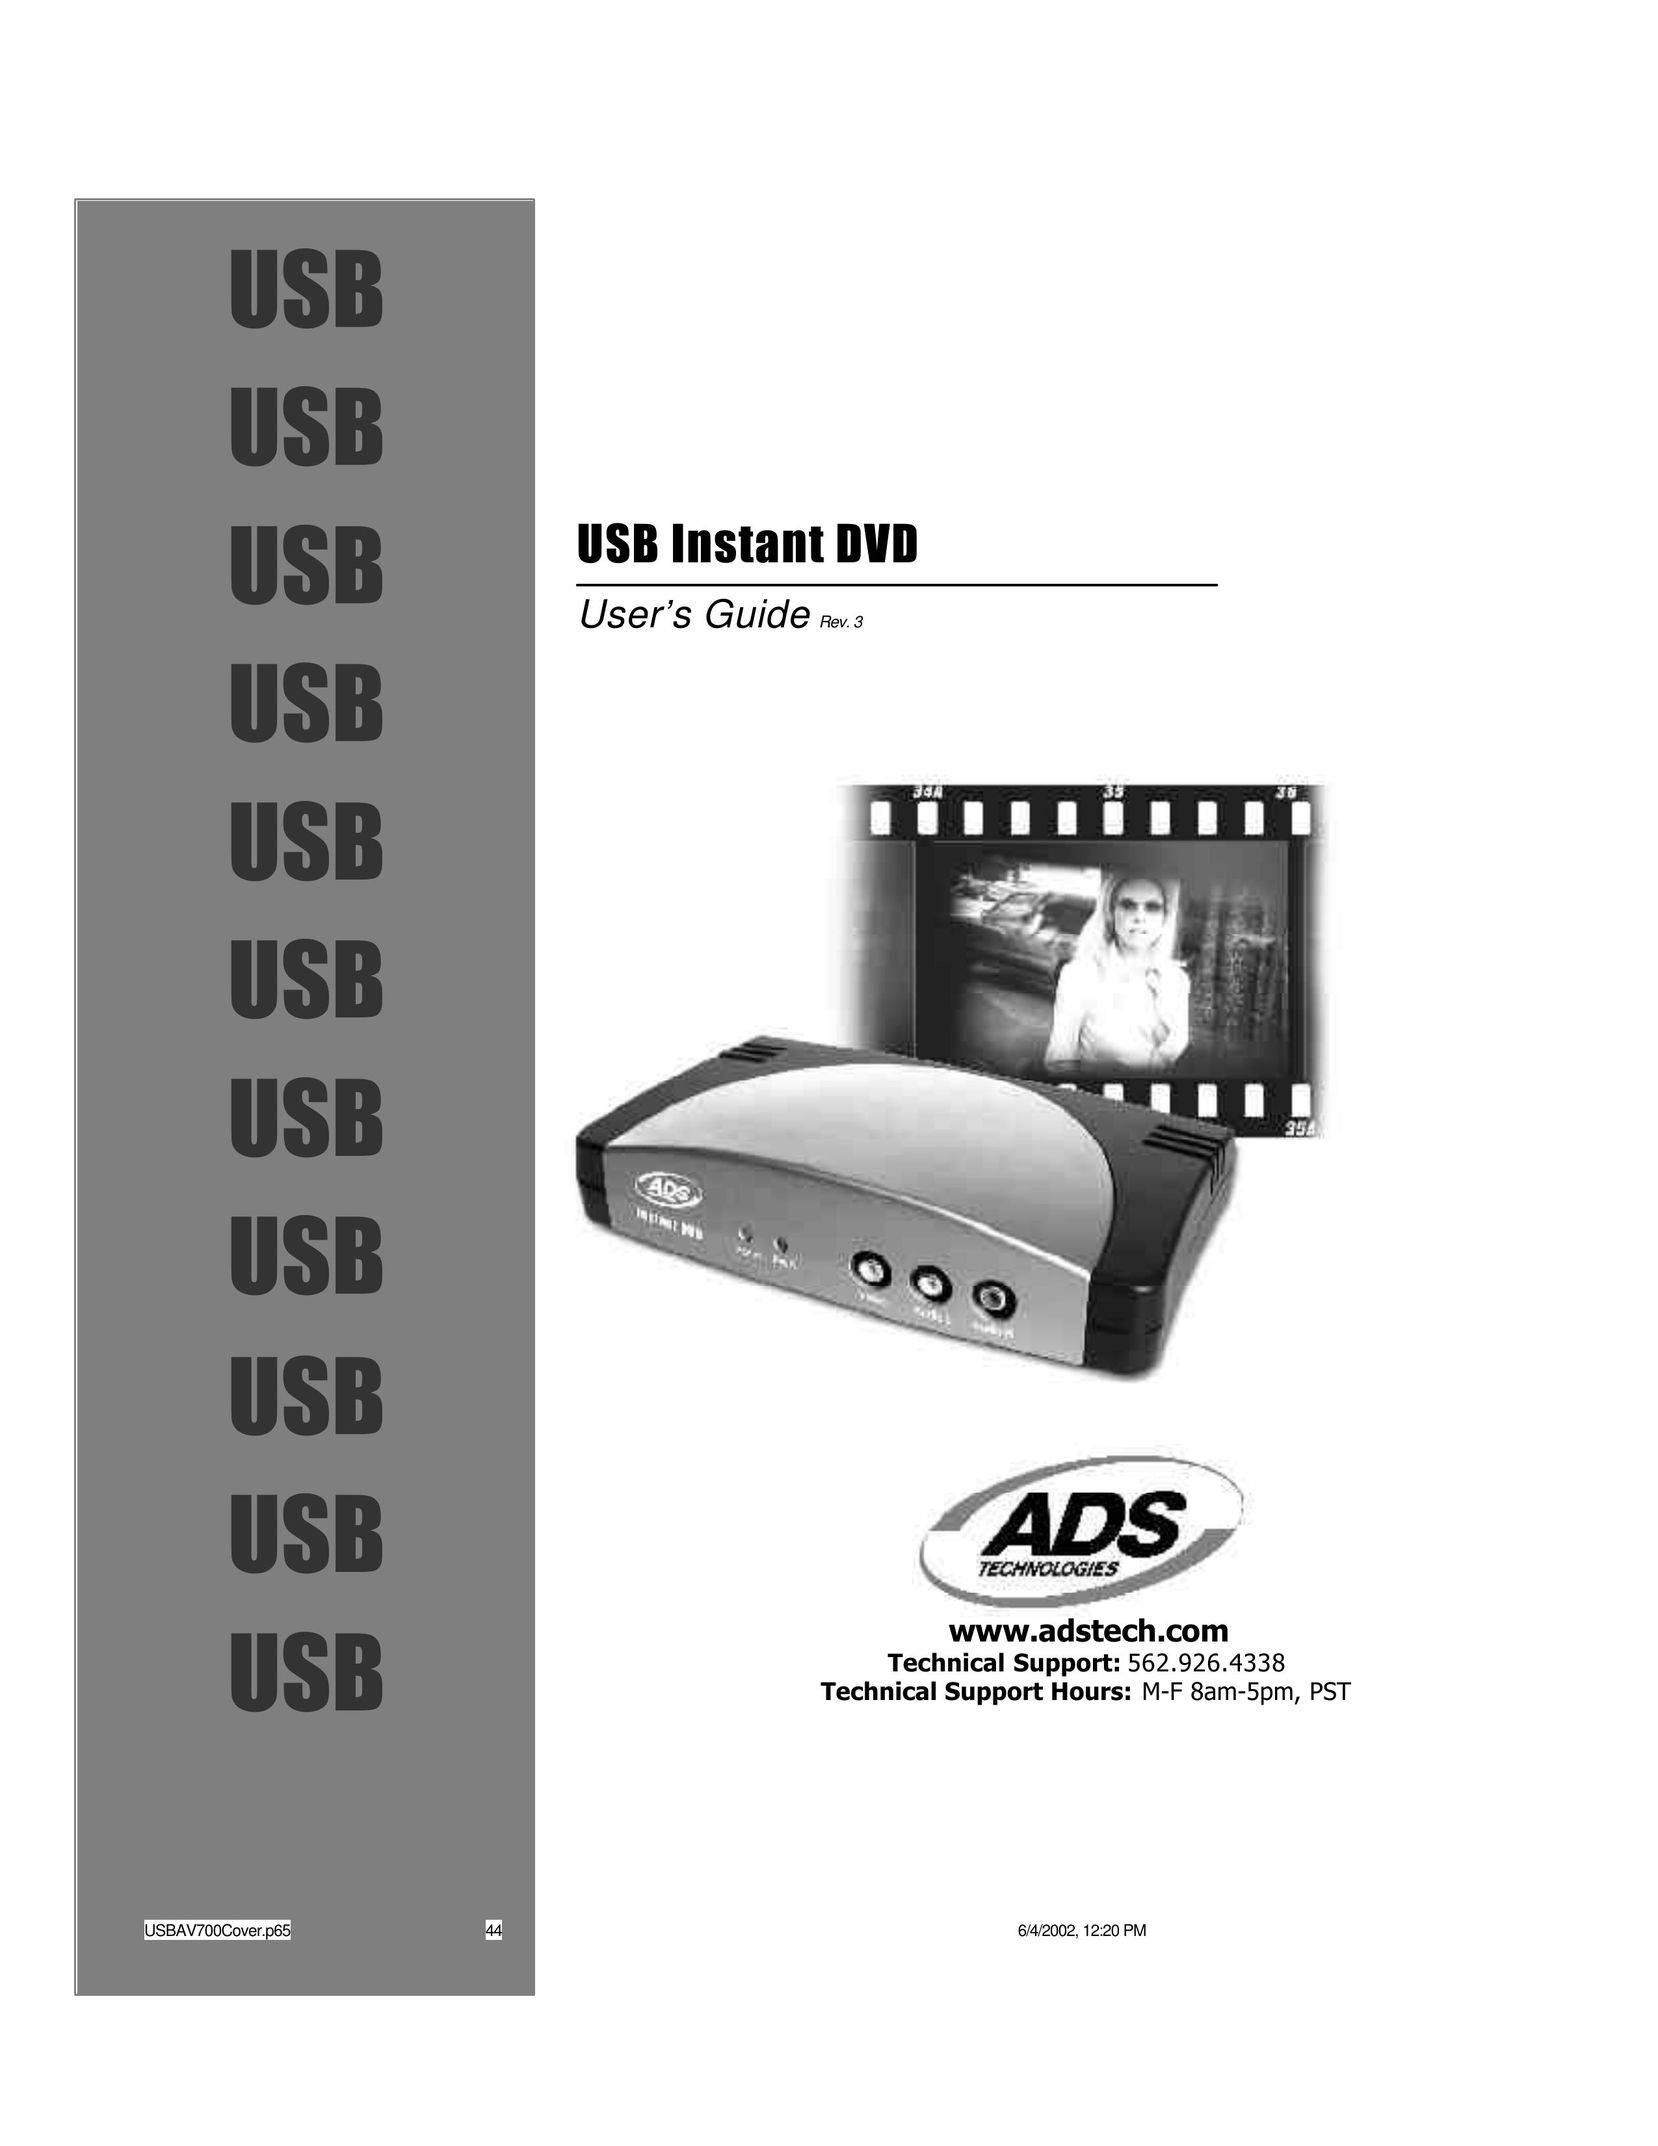 ADS Technologies USB Instant DVD DVD Recorder User Manual